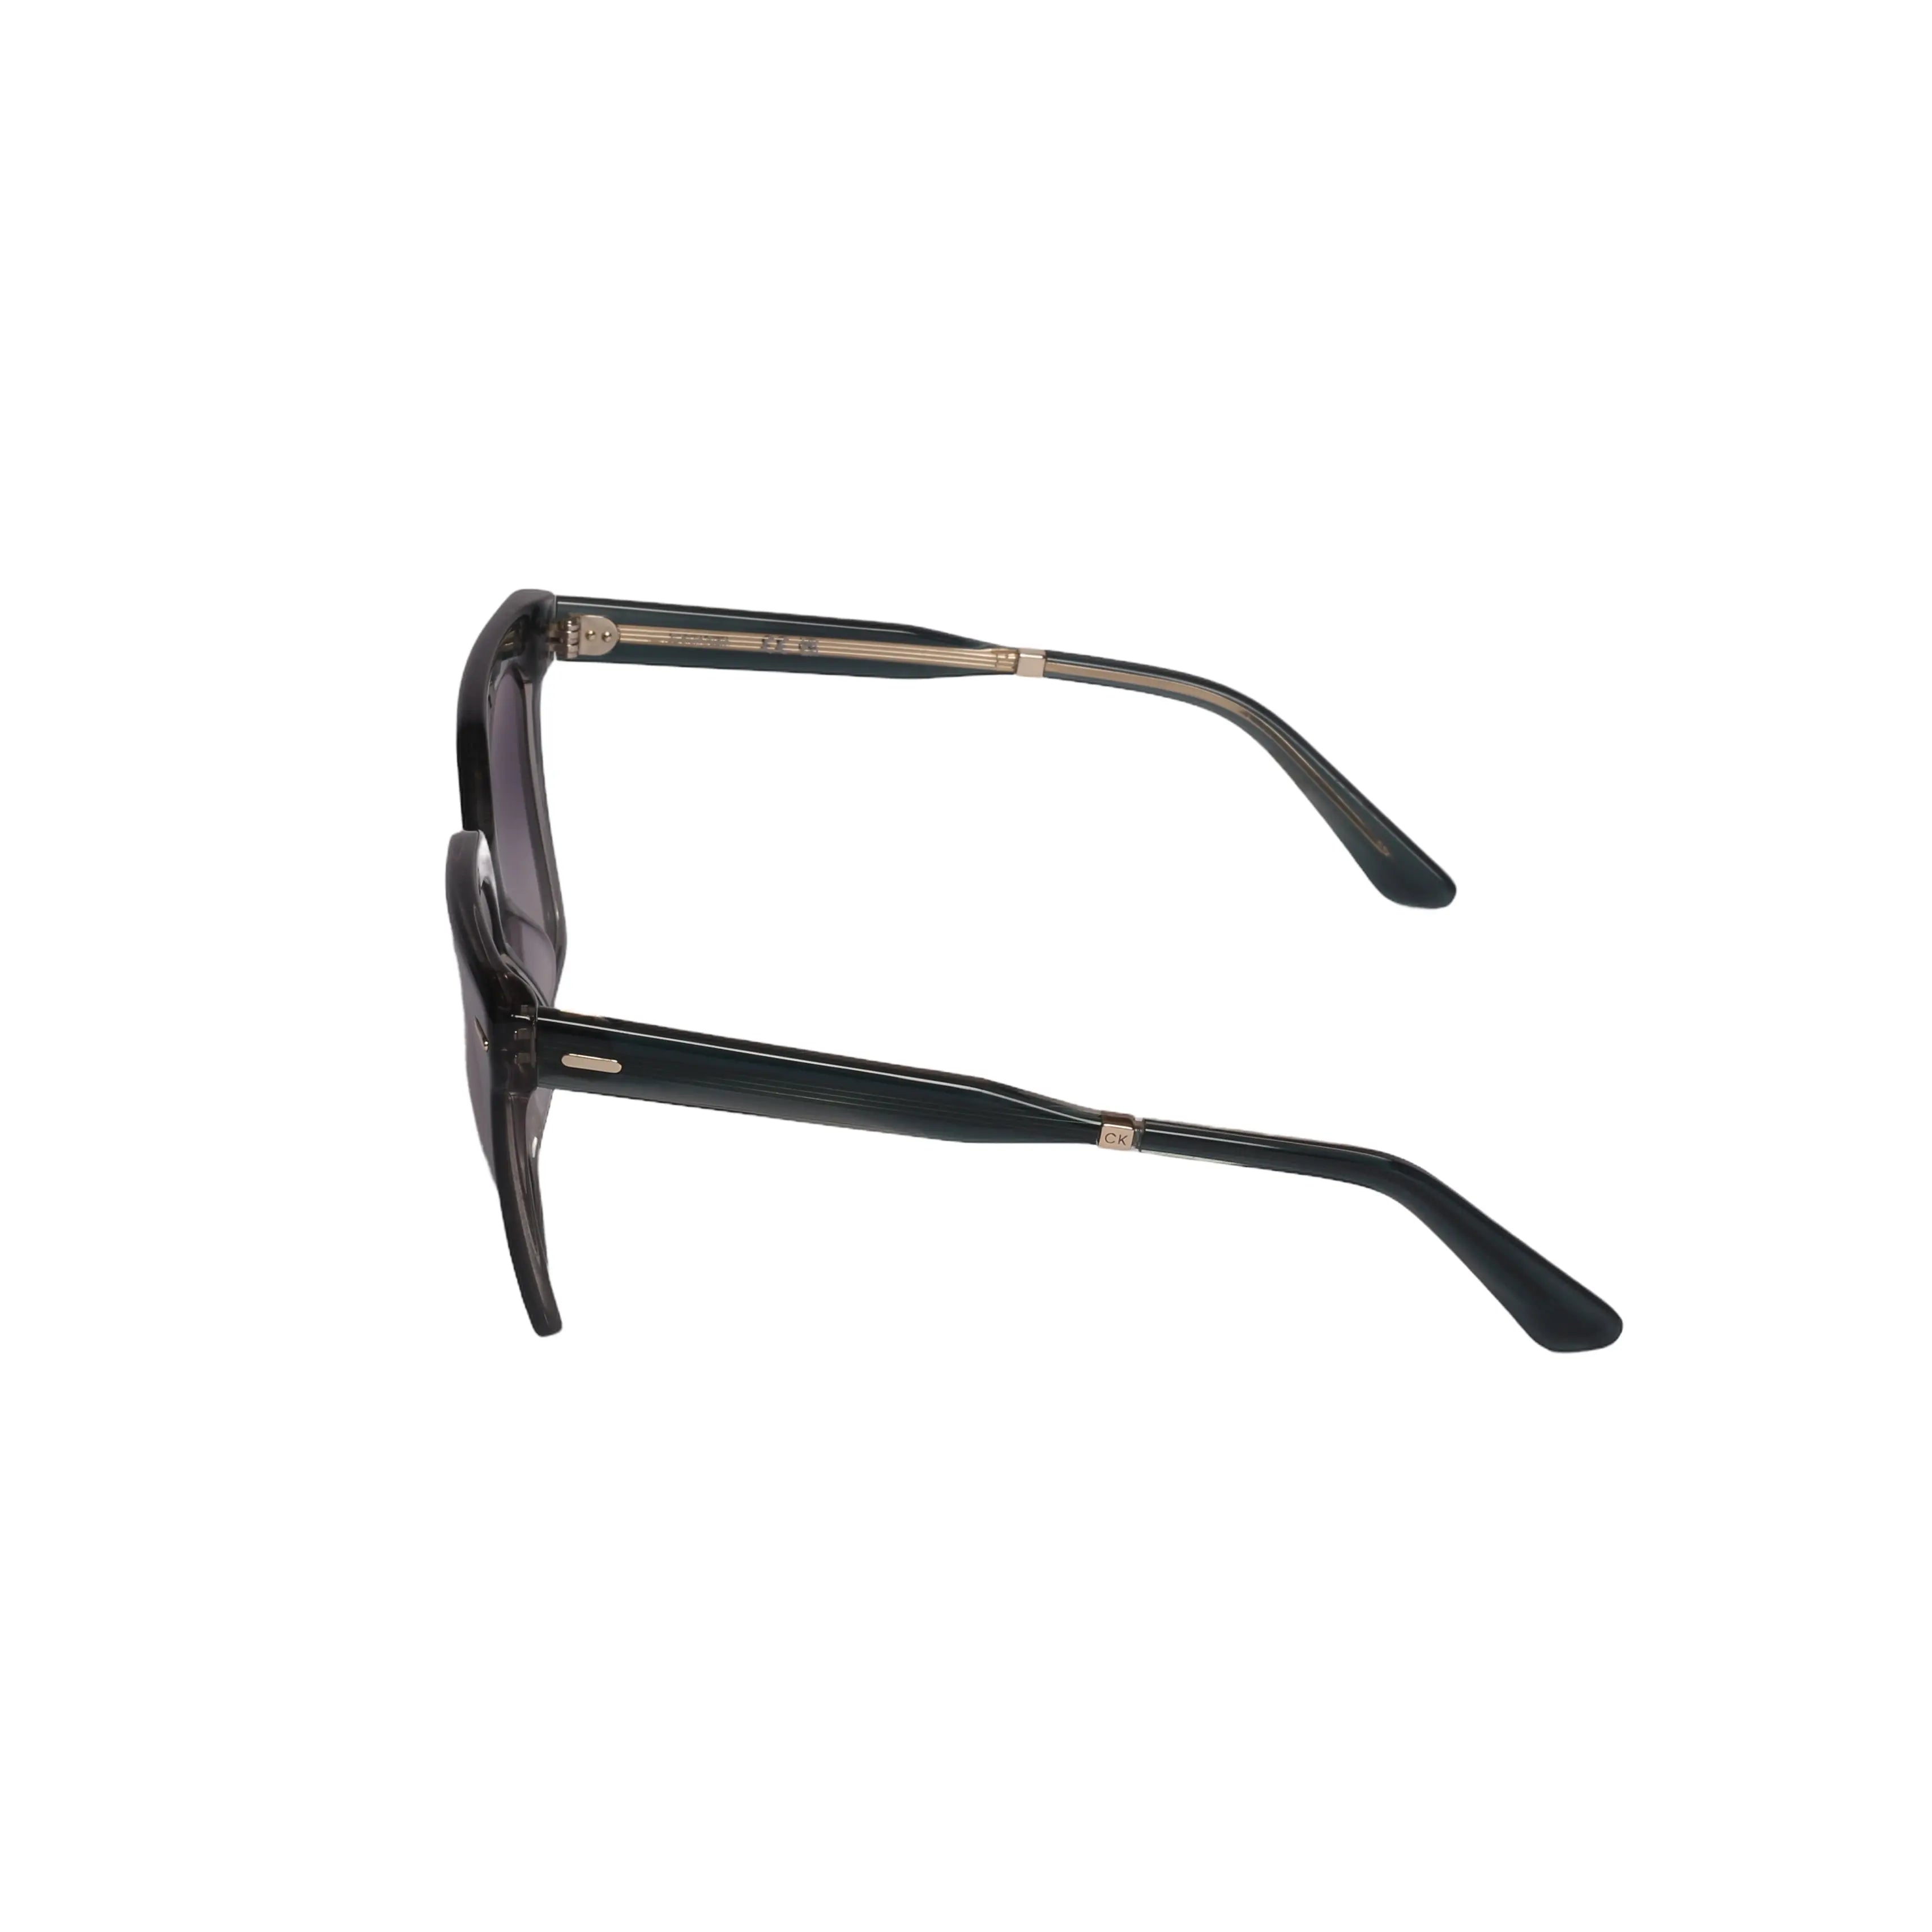 Calvin Klein CK-CK 22534-55-431 Sunglasses - Premium Sunglasses from Calvin Klein - Just Rs. 9900! Shop now at Laxmi Opticians